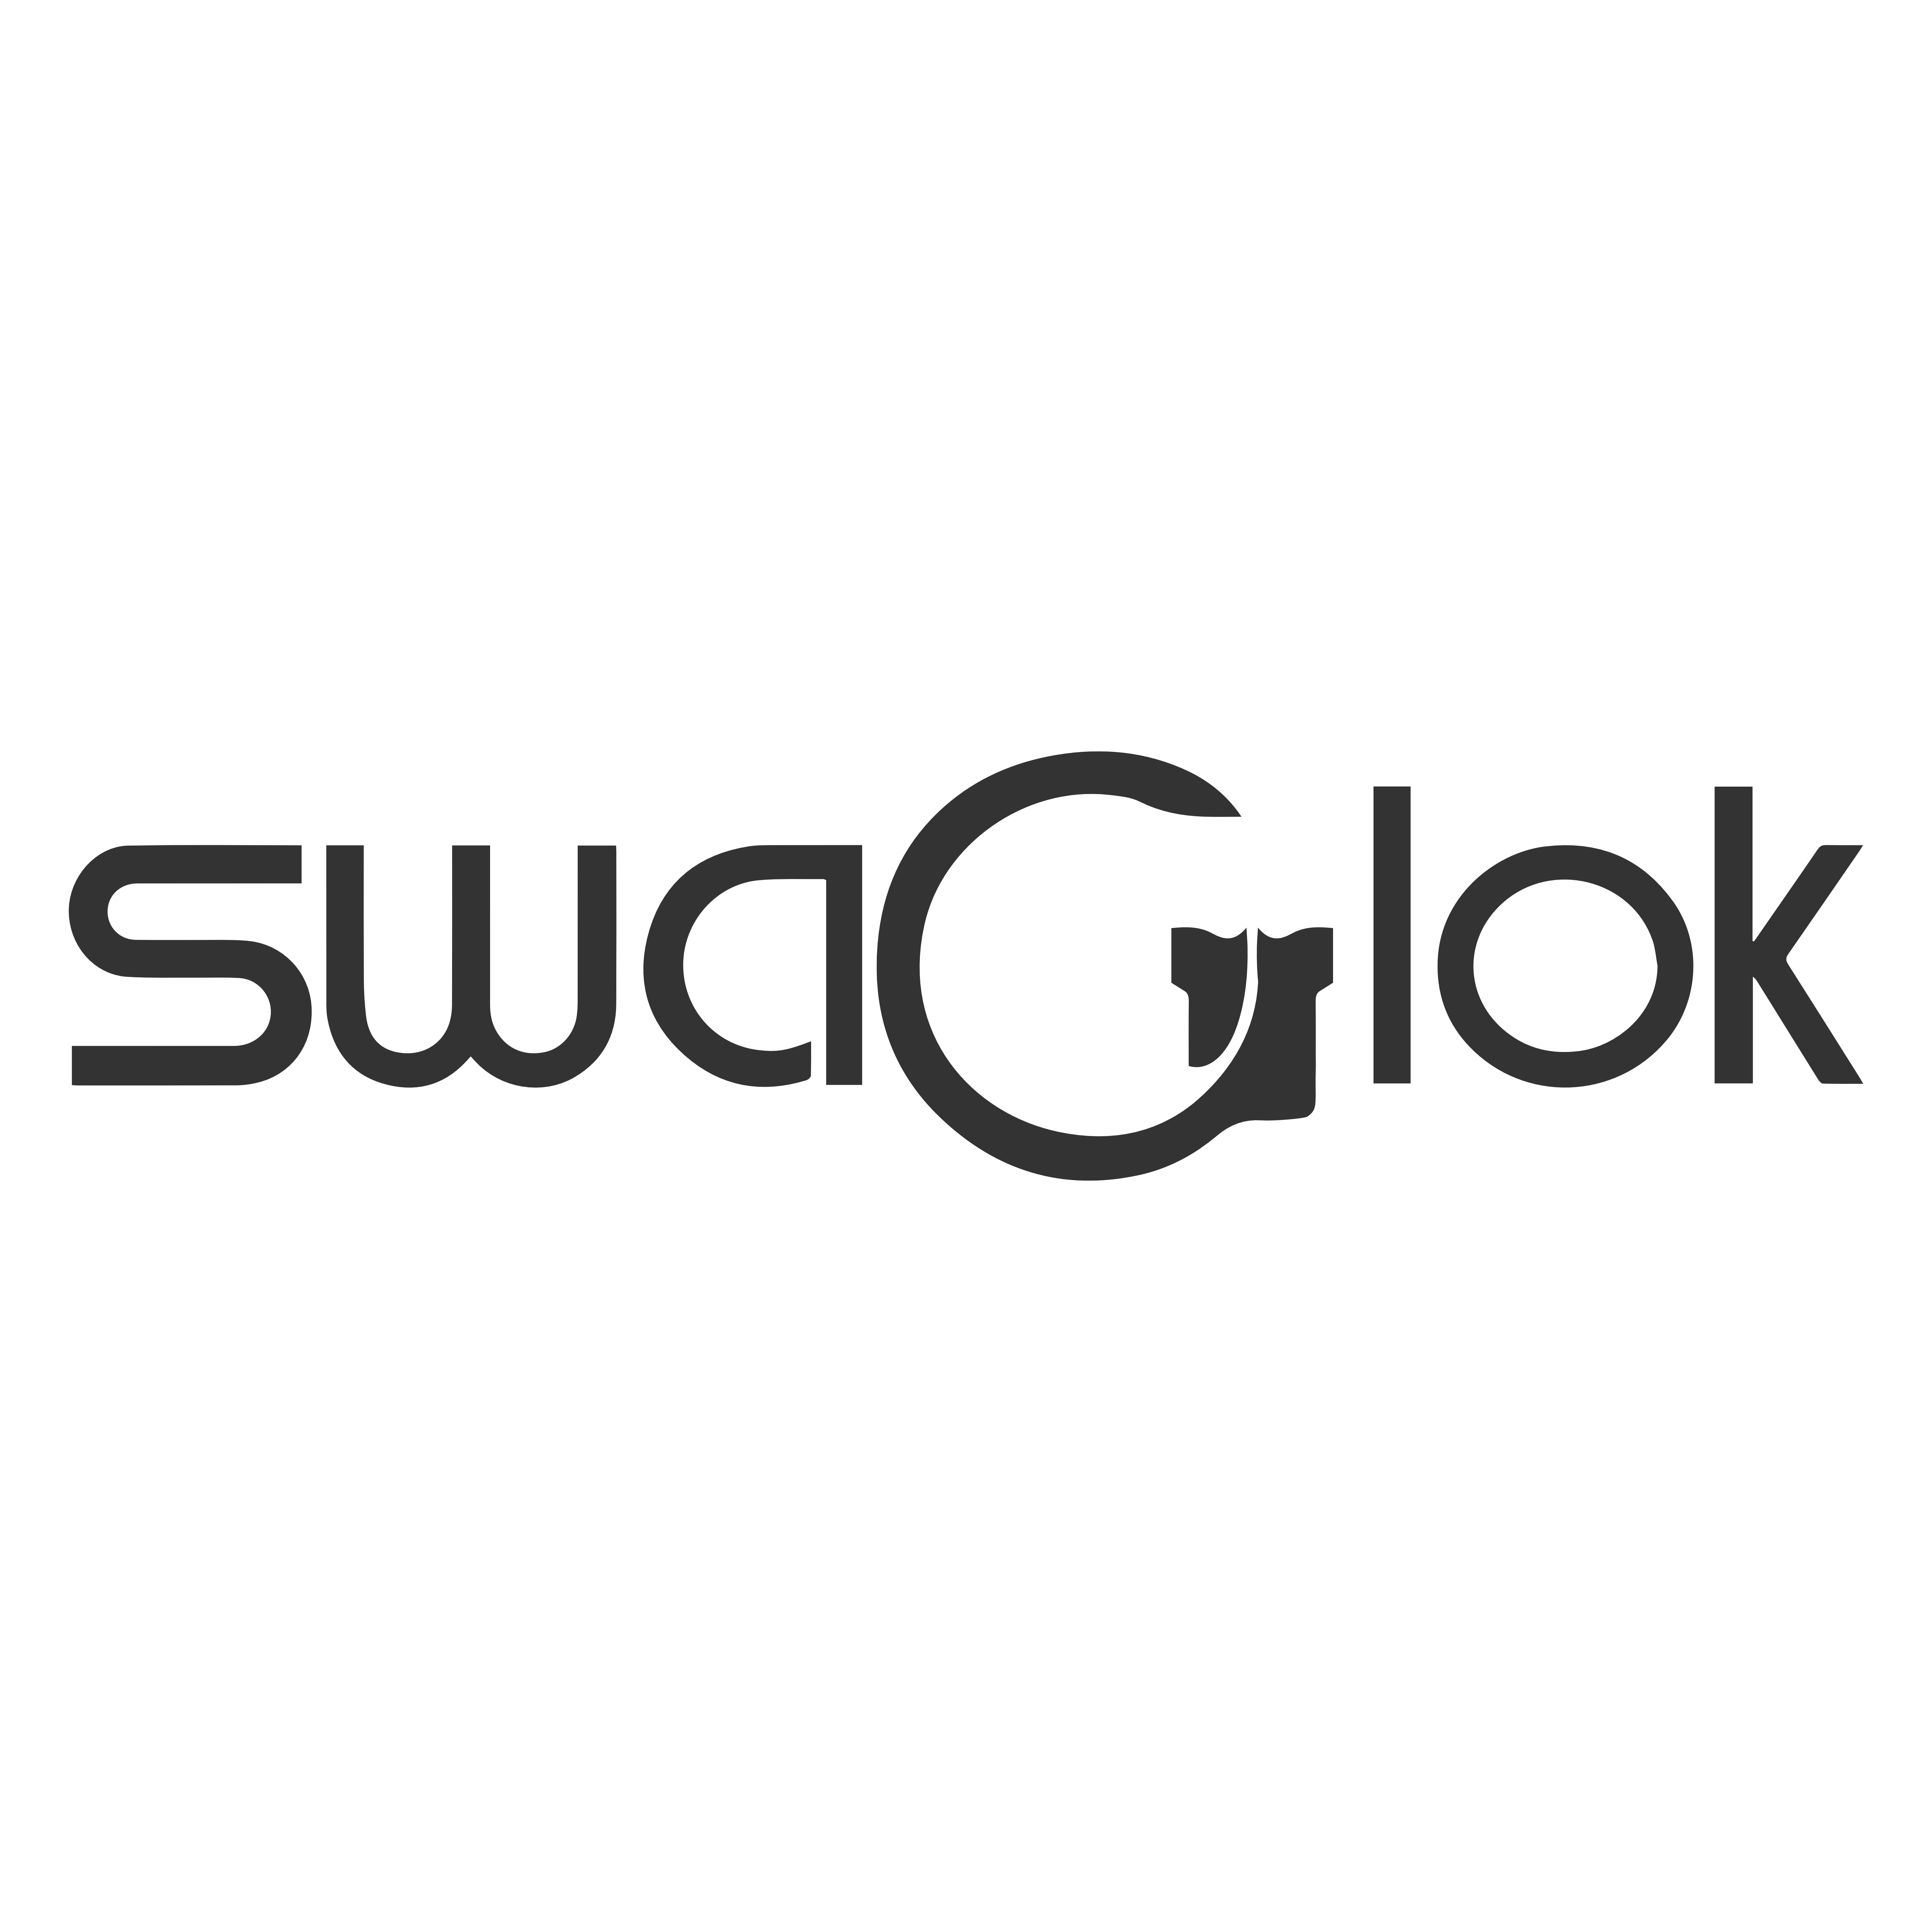 Swaglok